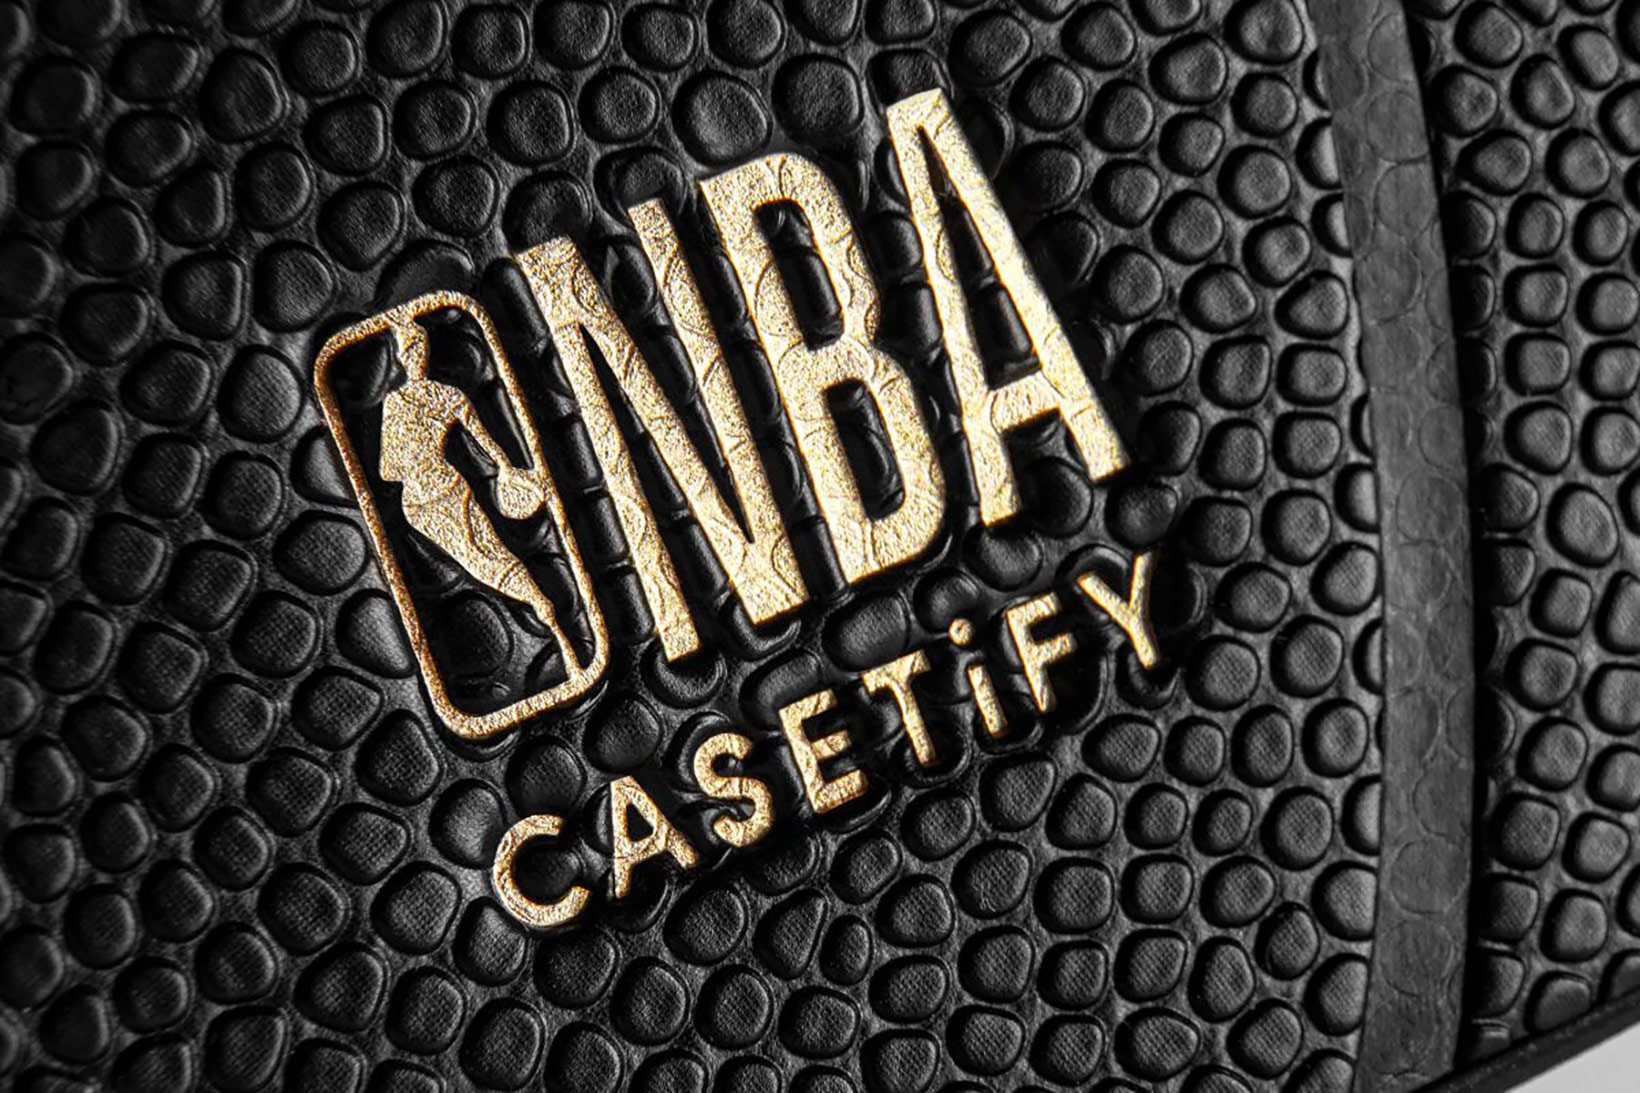 casetify nba national basketball association collaboration black pebble leather